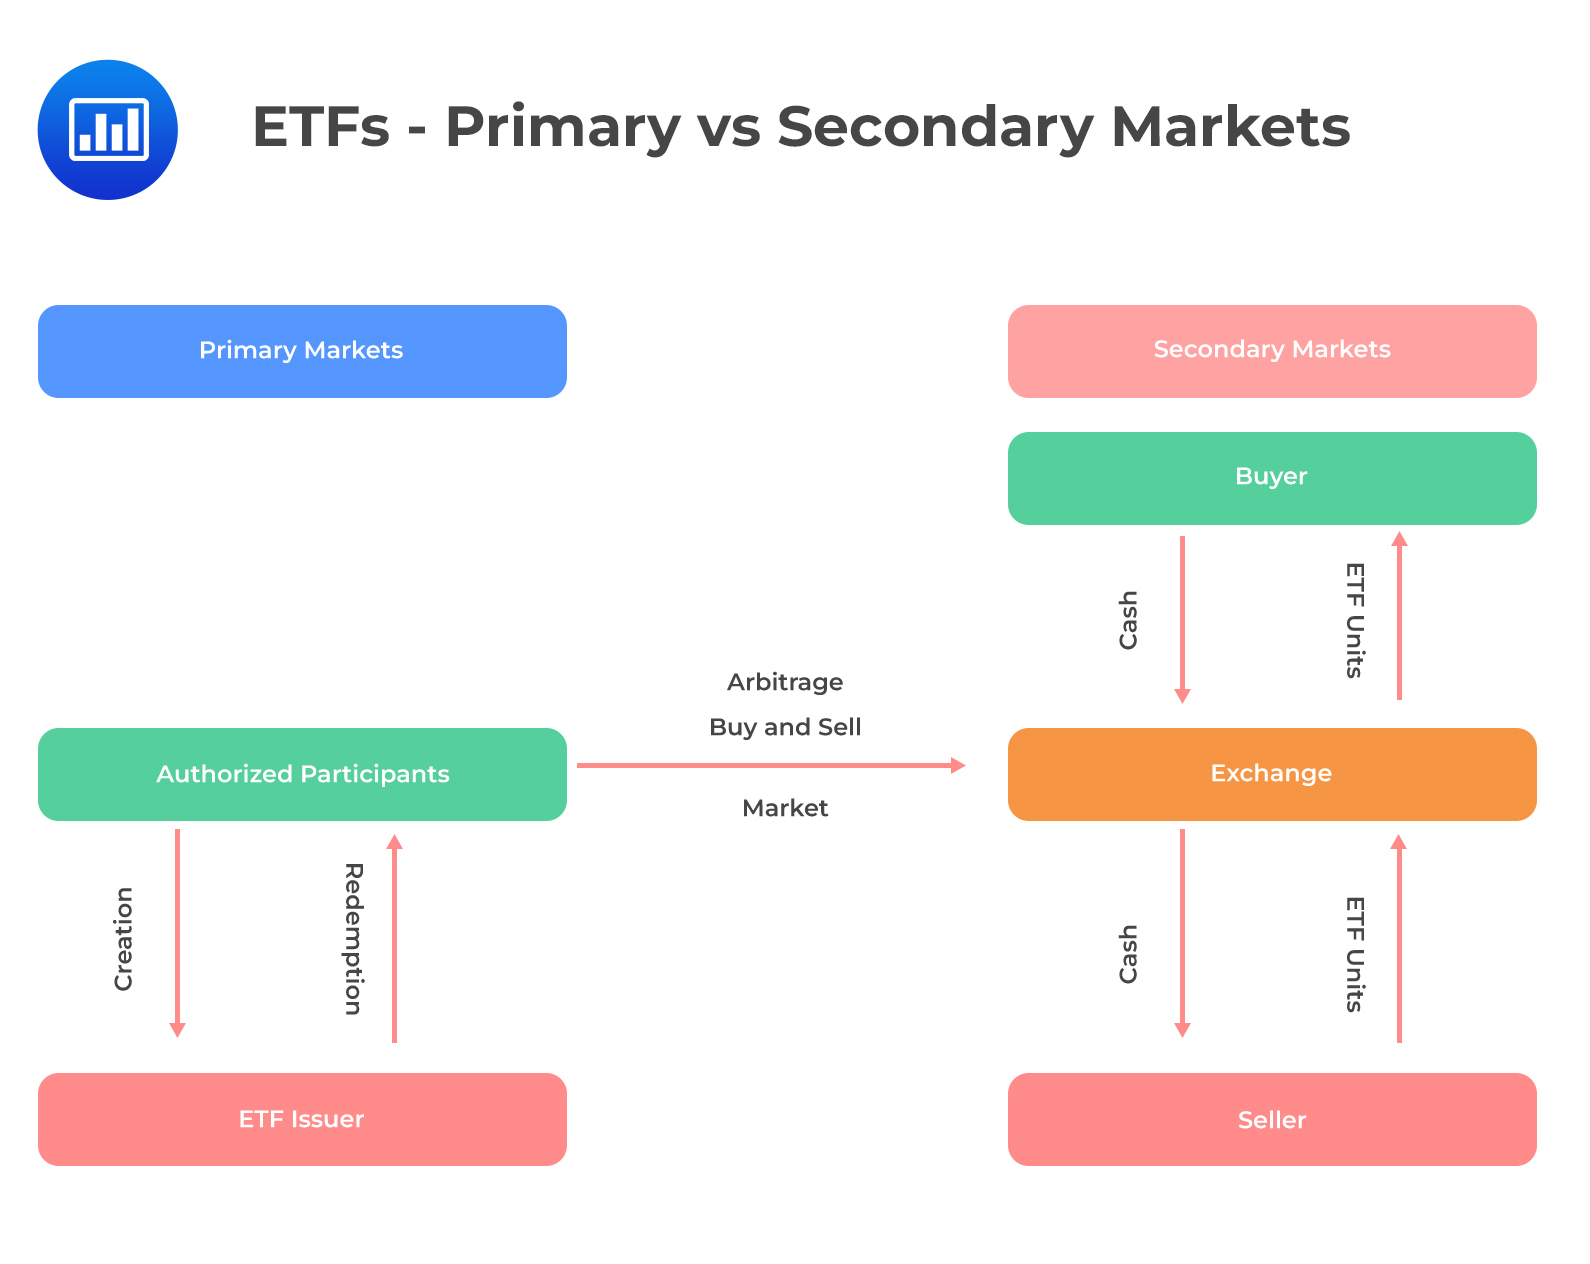 ETFs - Primary vs Secondary Markets